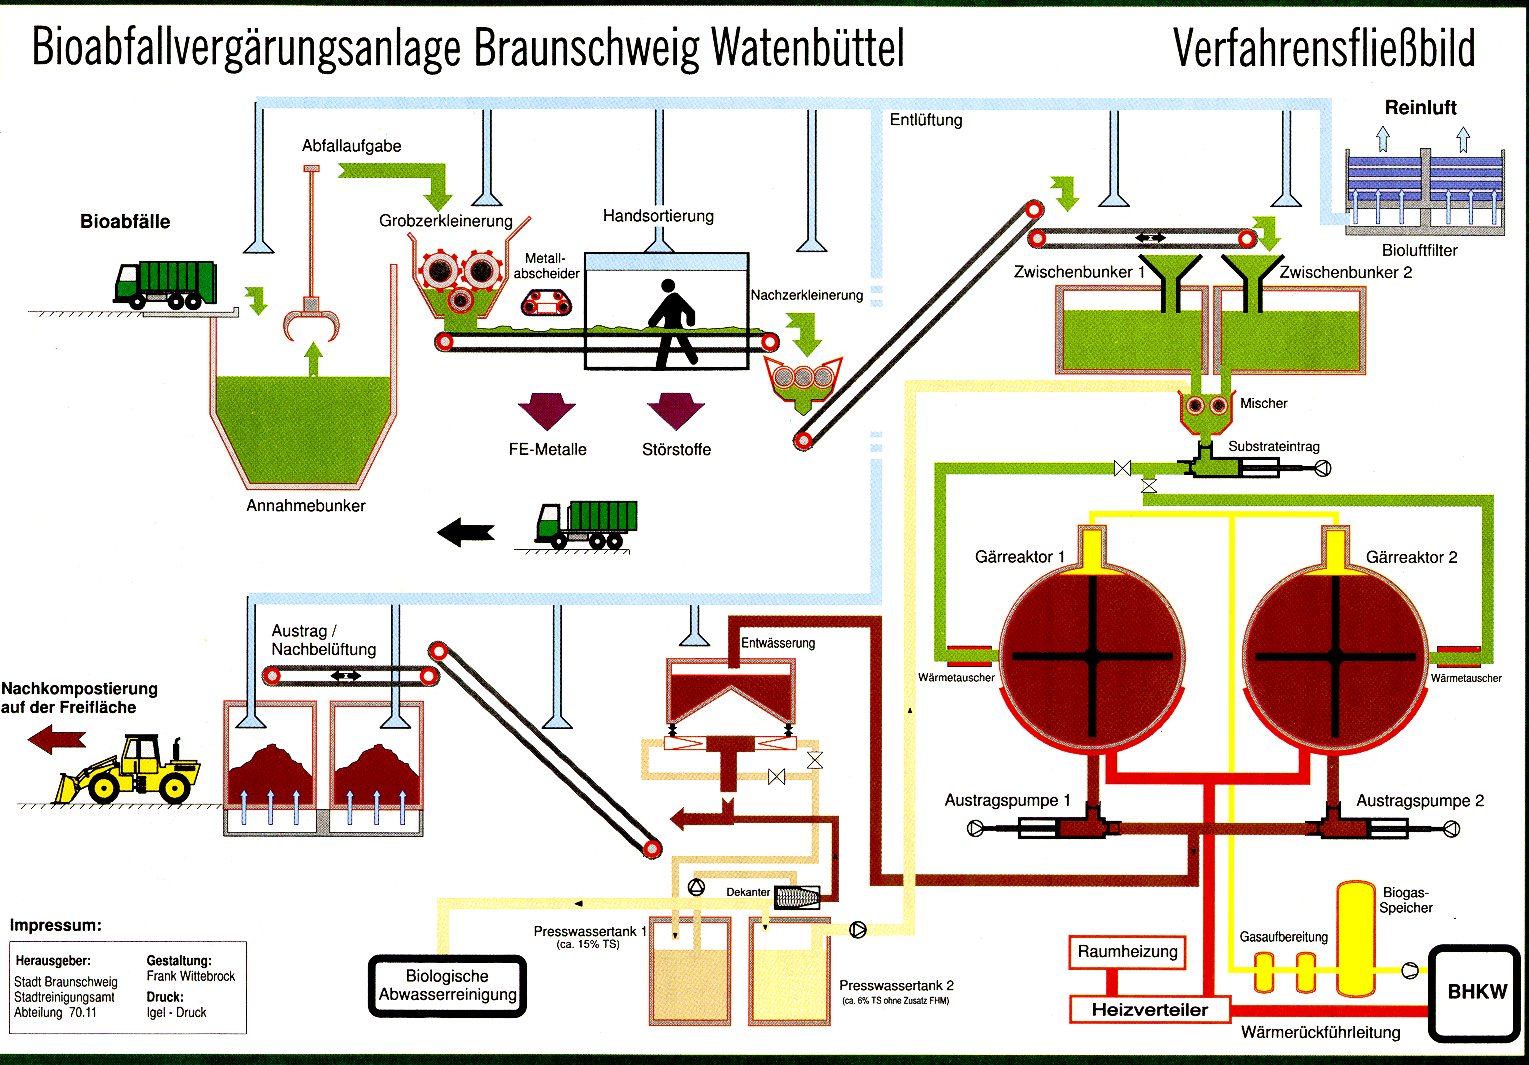 L impianto di Braunschweig-Watenbüttel (D) è stato costruito dalla Buhler nel 1997 e tratta circa 20000 t/a di rifiuti organici da raccolta differenziata Digestion plant Brauschweig-Watenbüttel